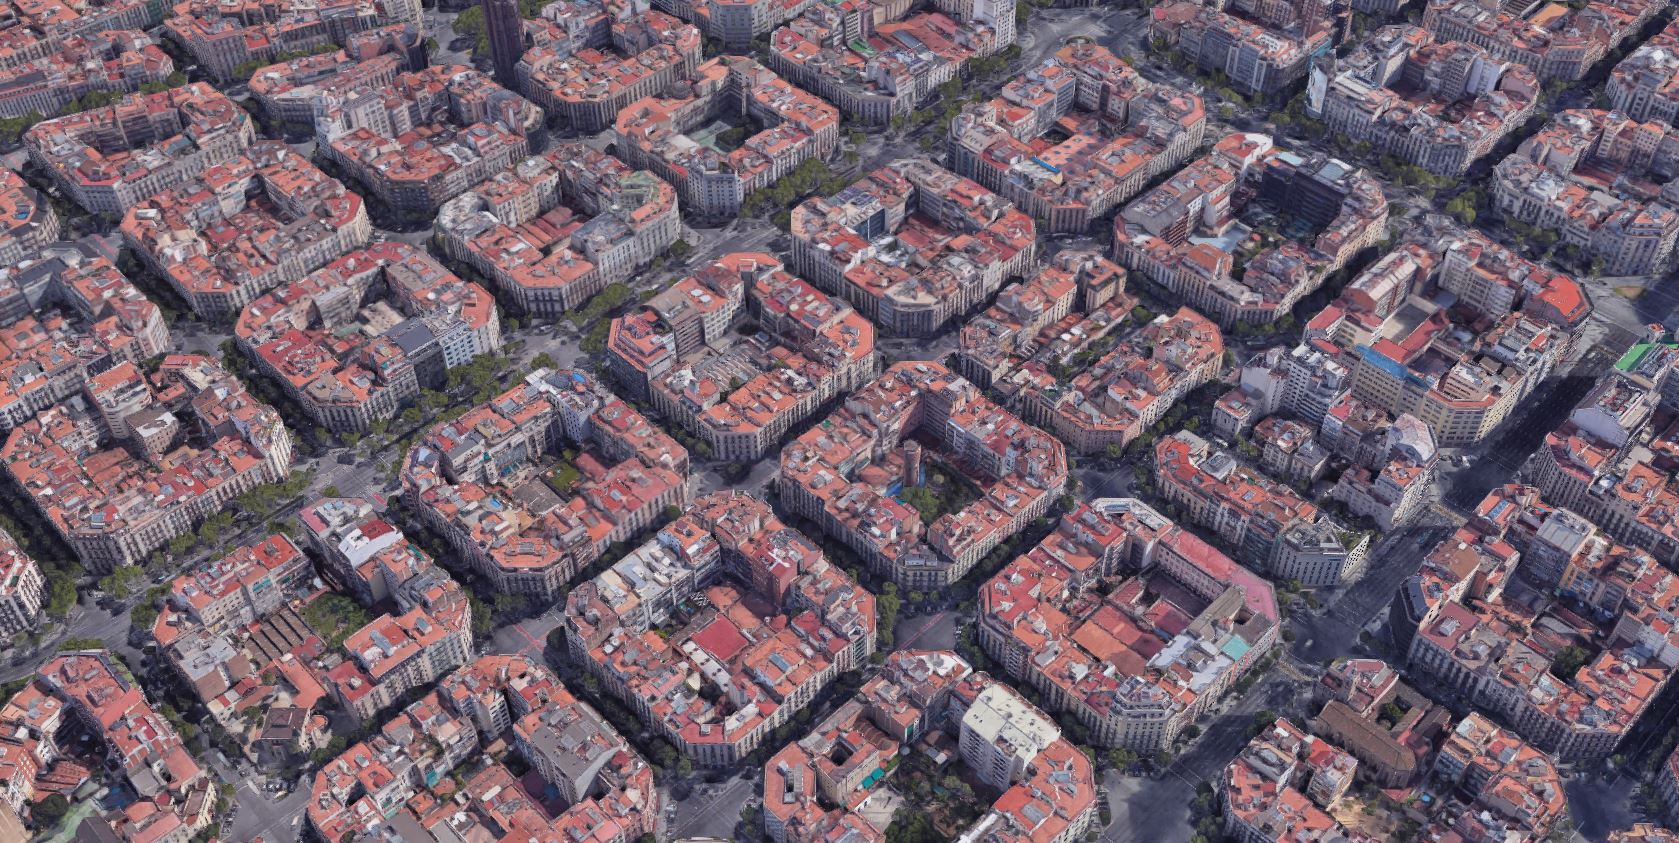 Vista aérea de Barcelona. Fuente - google